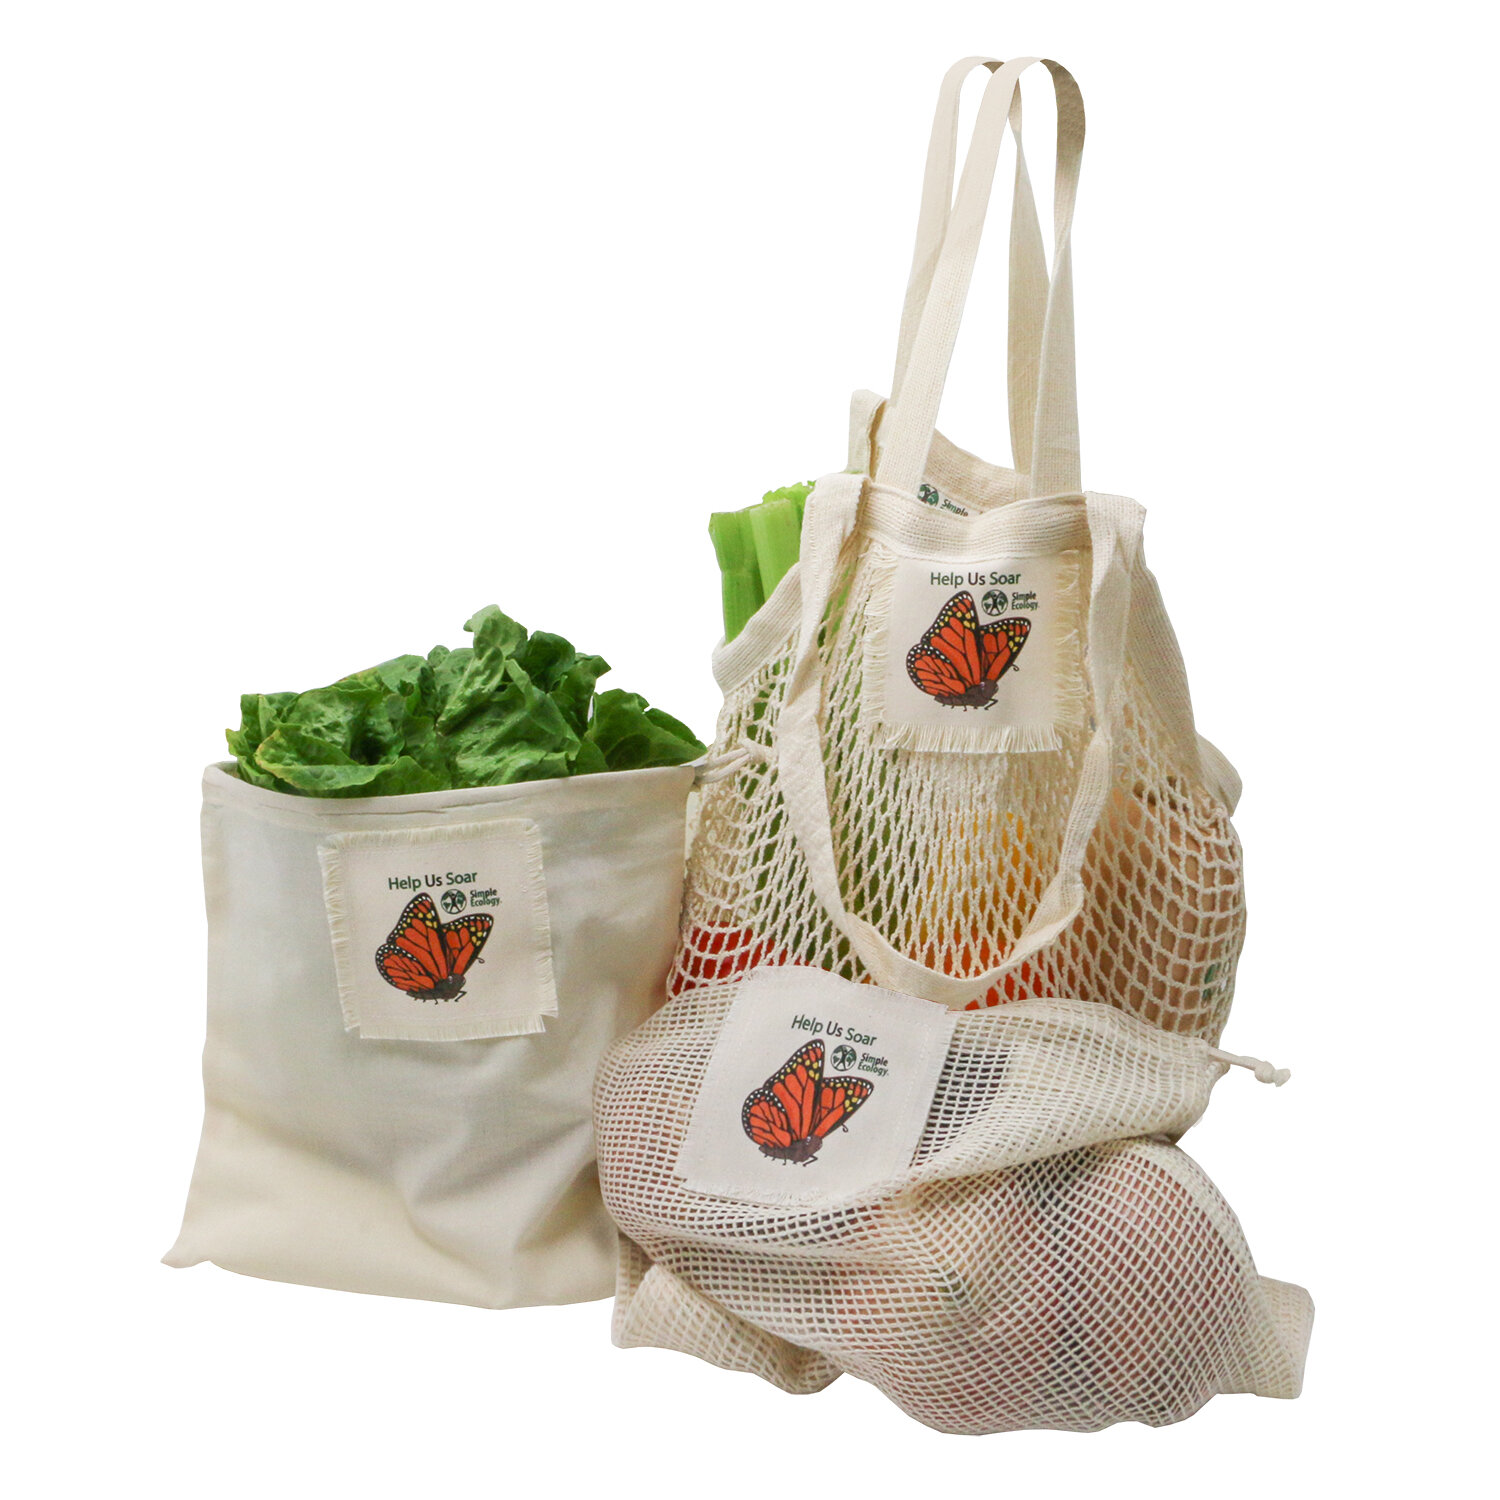 Fruit & Veggie Themed Tote Bag & Pouch Set